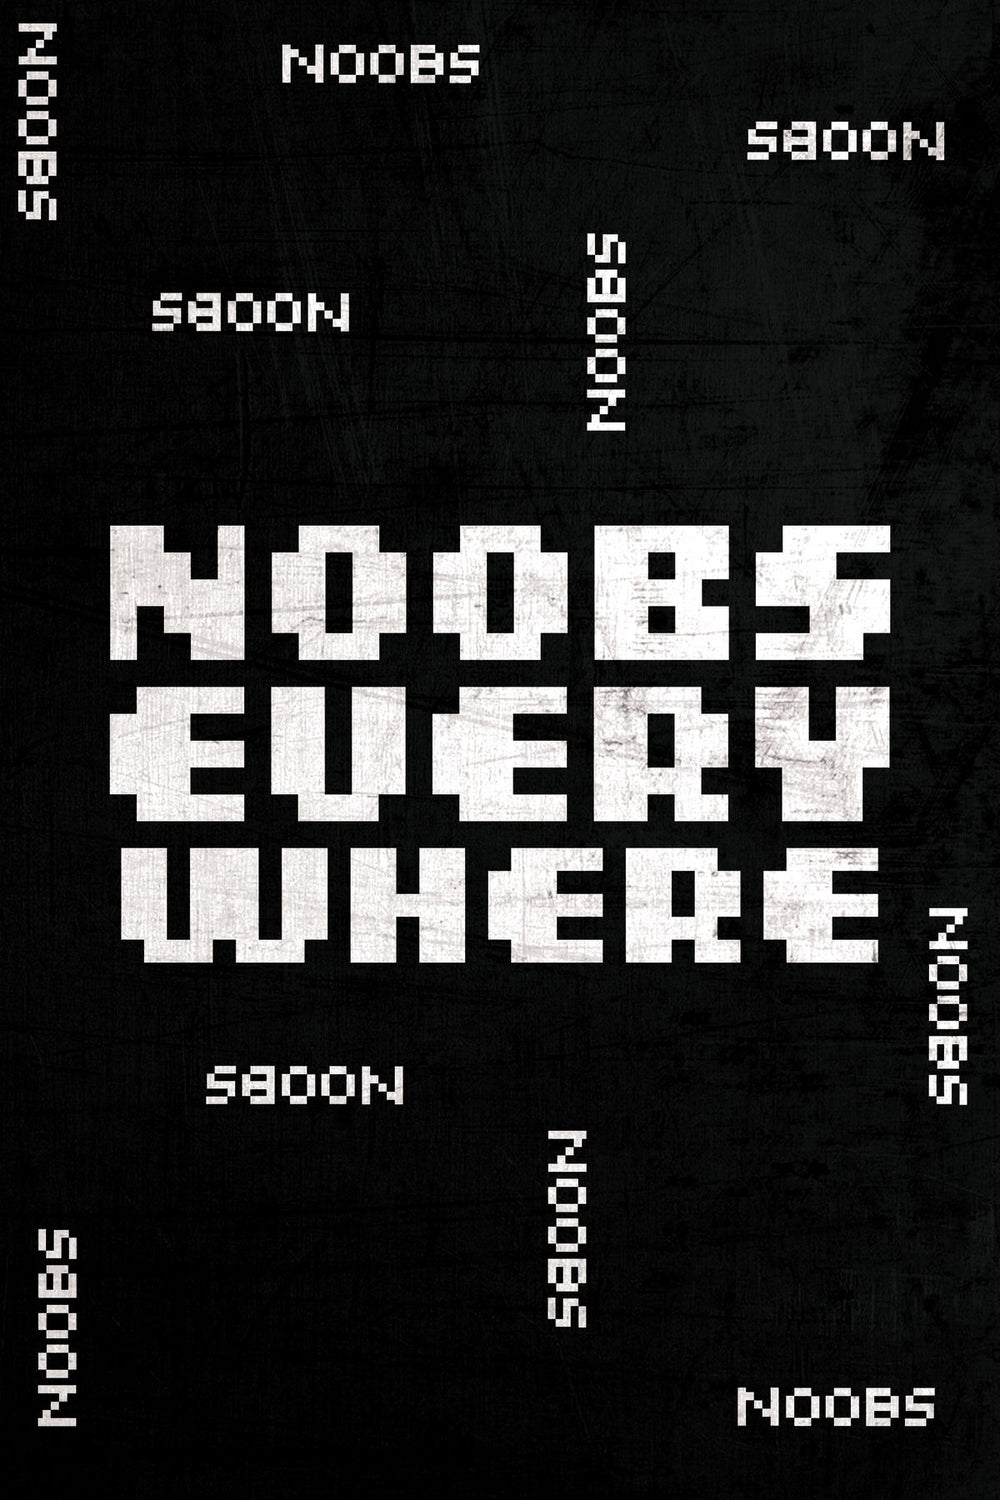 Noobs Everywhere